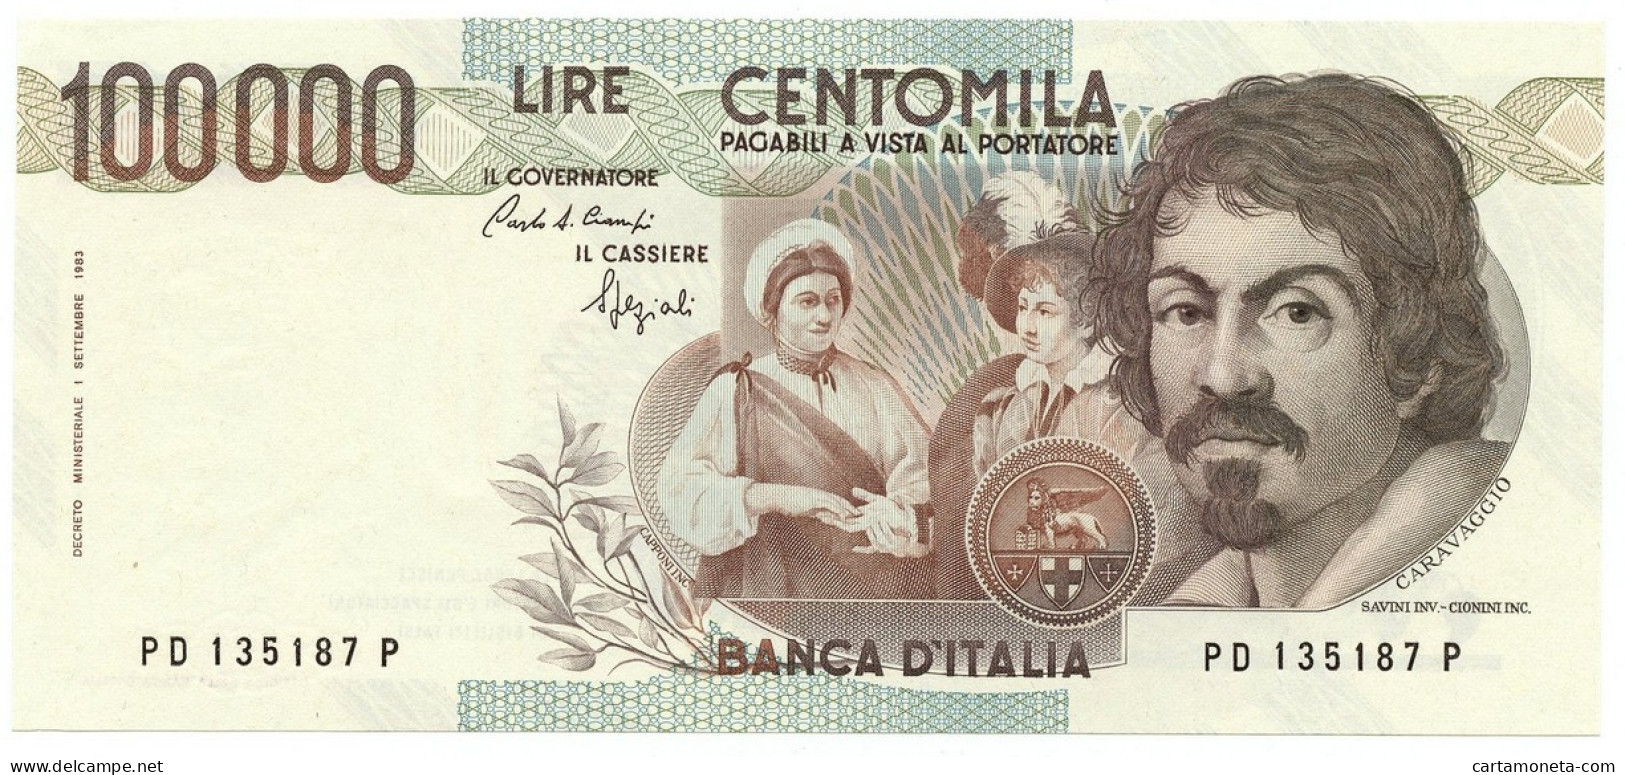 100000 LIRE BANCA D'ITALIA CARAVAGGIO I TIPO LETTERA D 25/01/1990 QFDS - Other & Unclassified